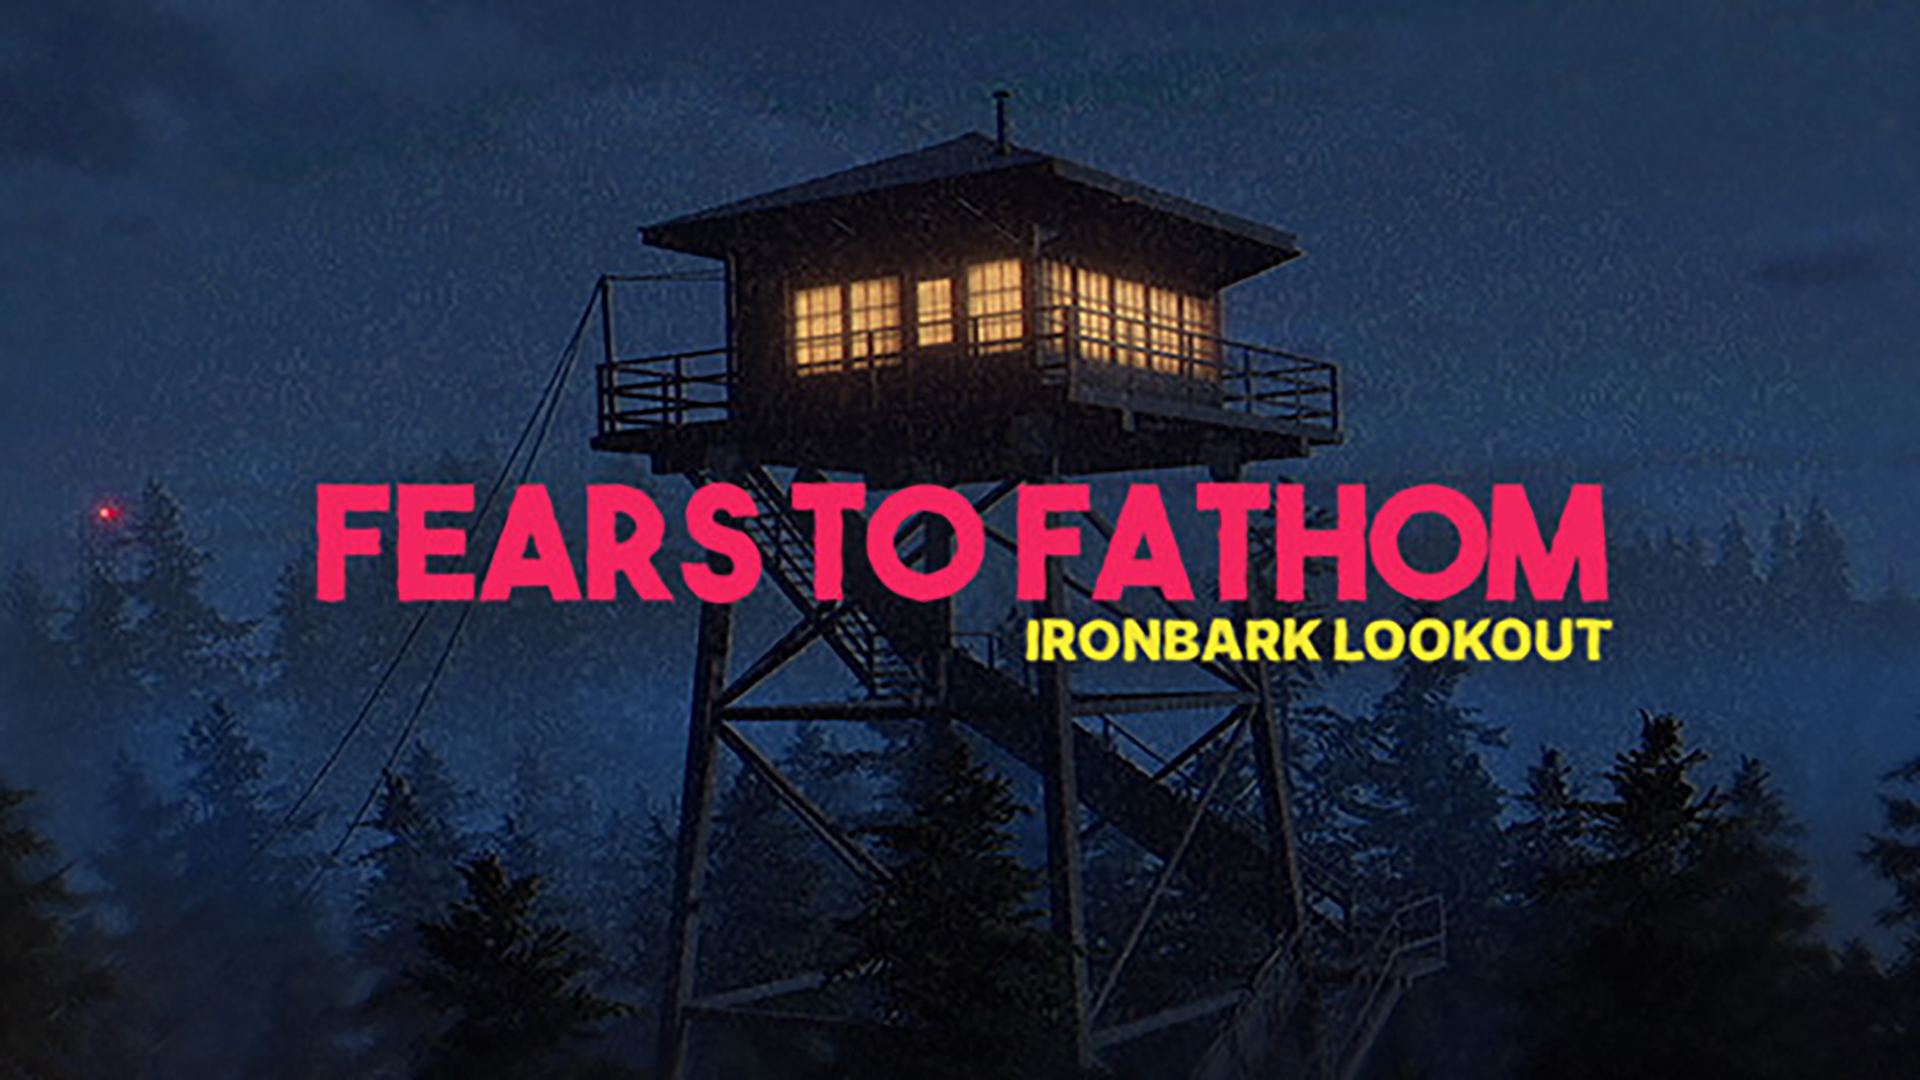 Fears to fathom ironbark пароль. Ironbark Lookout. Fears to Fathom Ironbark Lookout. Ironbark Lookout прохождение. Ironbark Lookout Fears to Fathom РЕС.